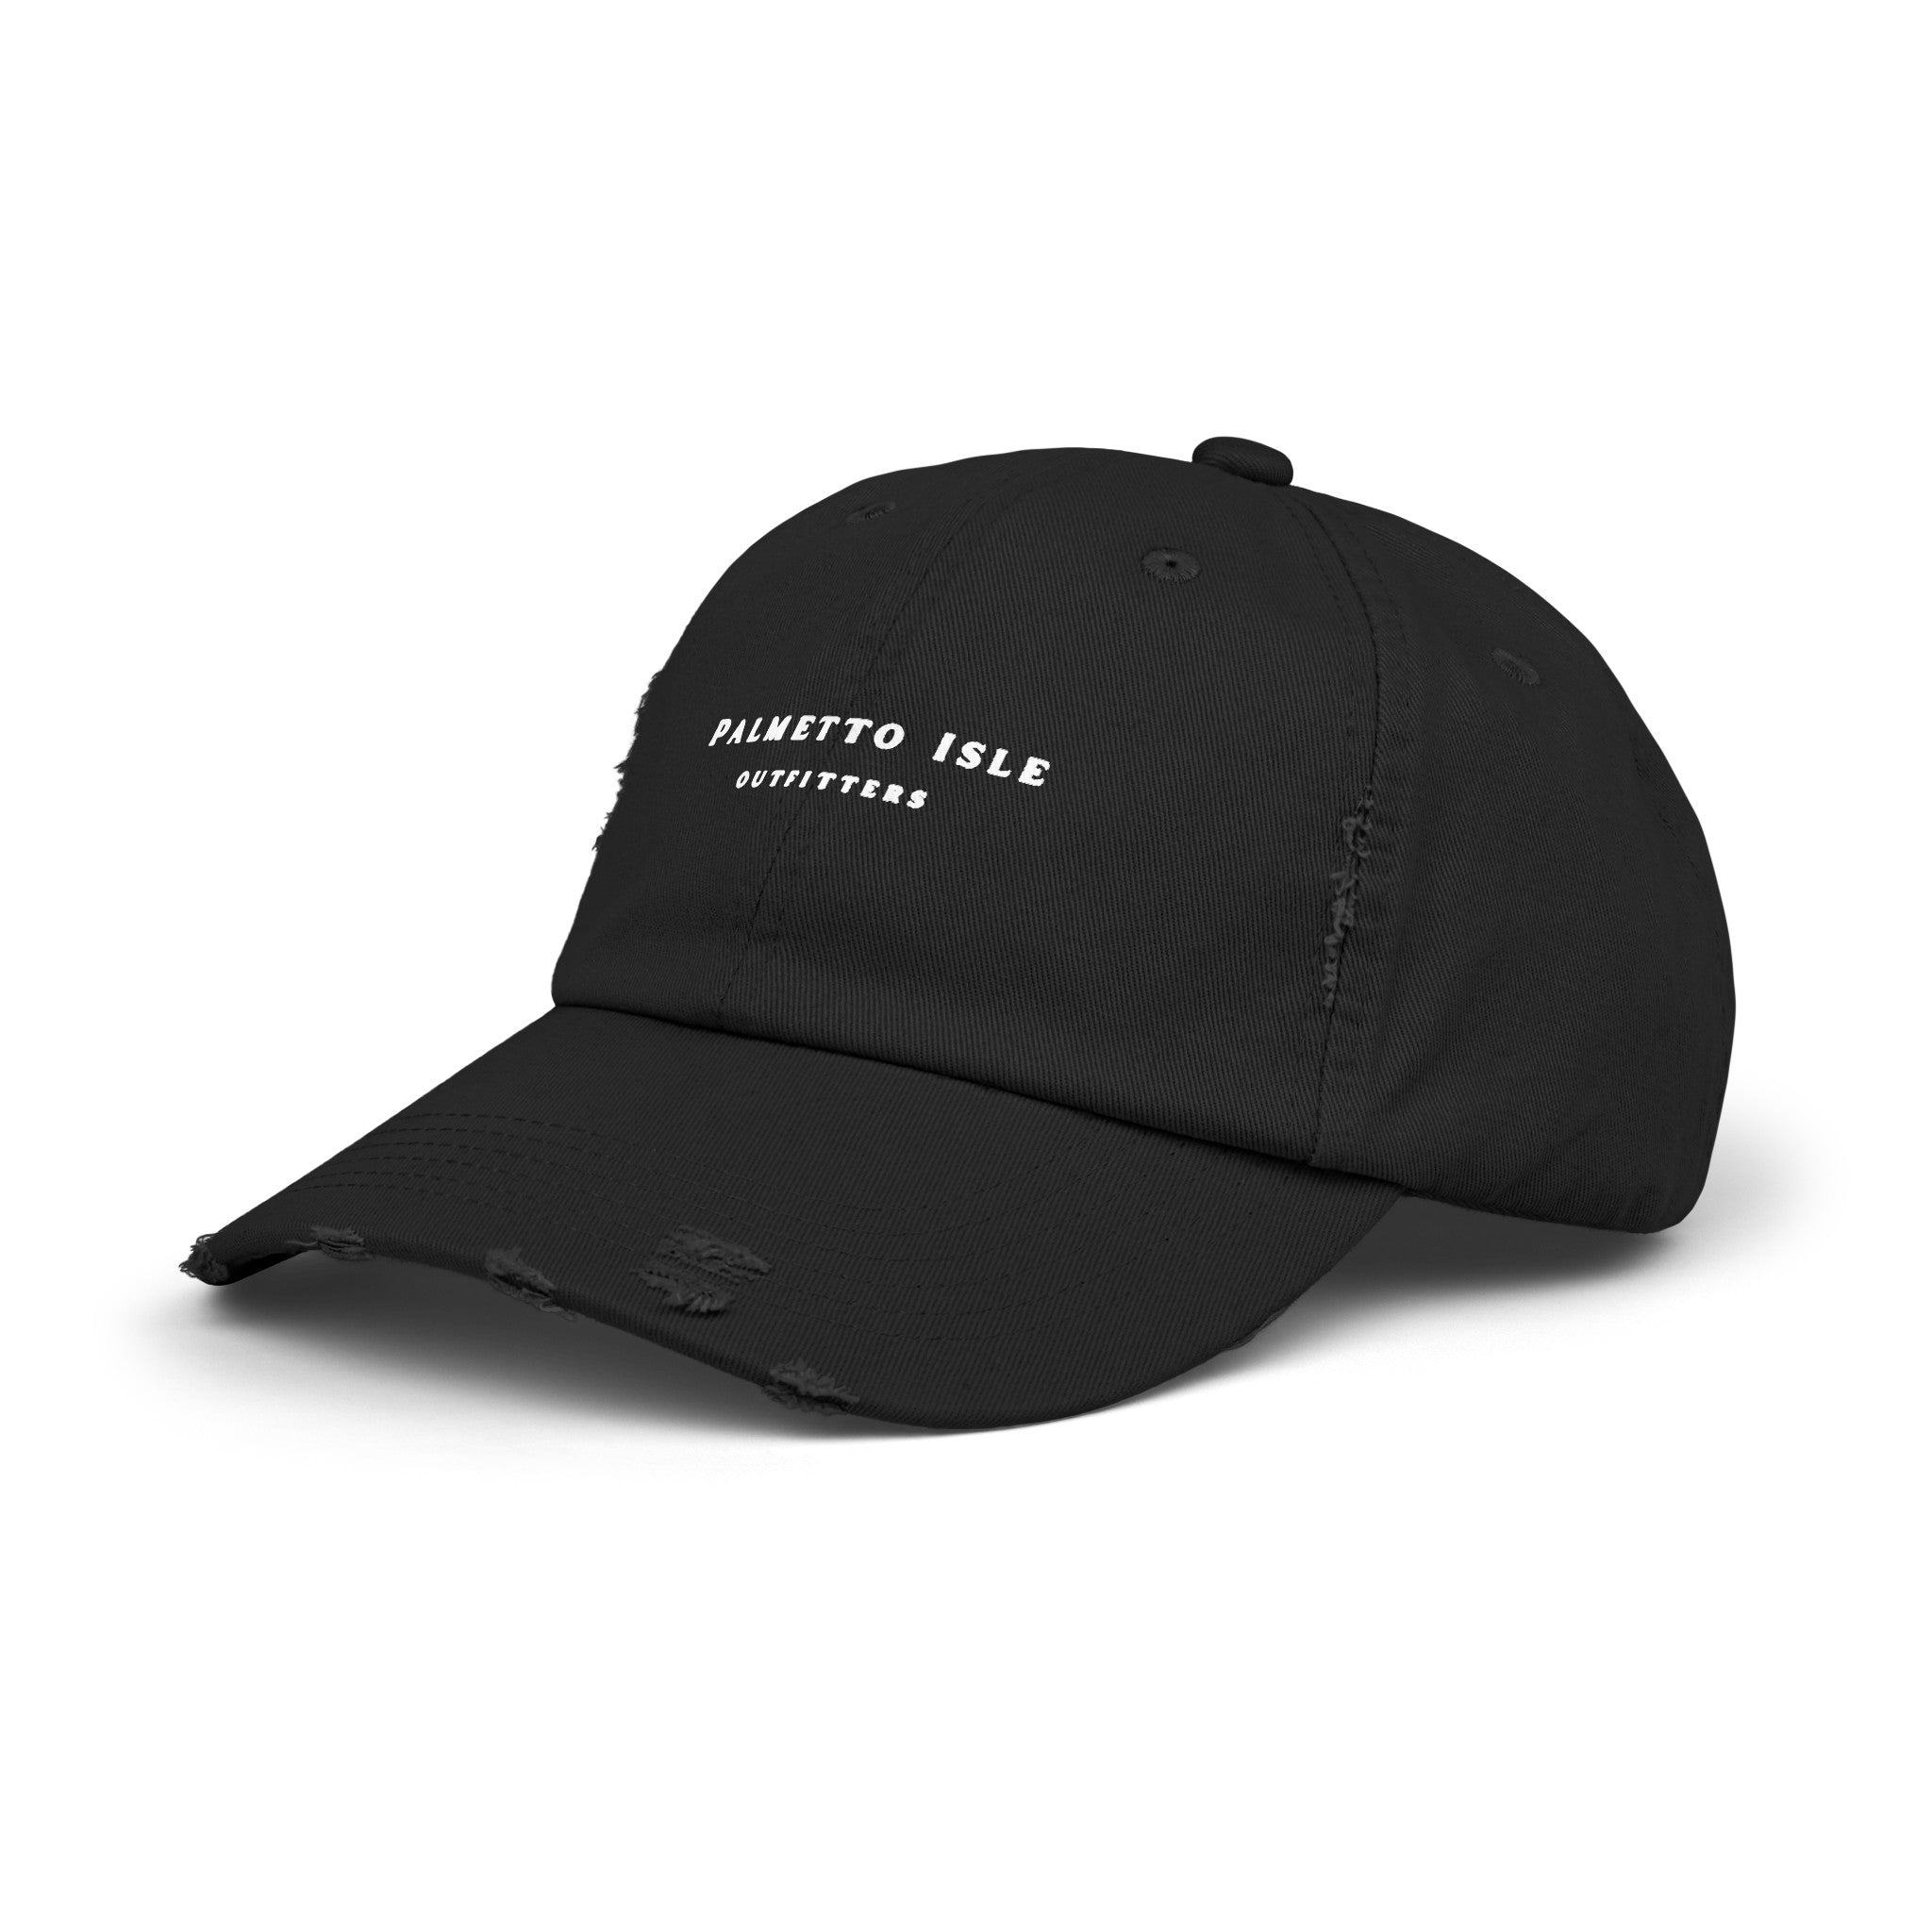 Palmetto Isle Worn Hat - Palmetto Isle Outfitters